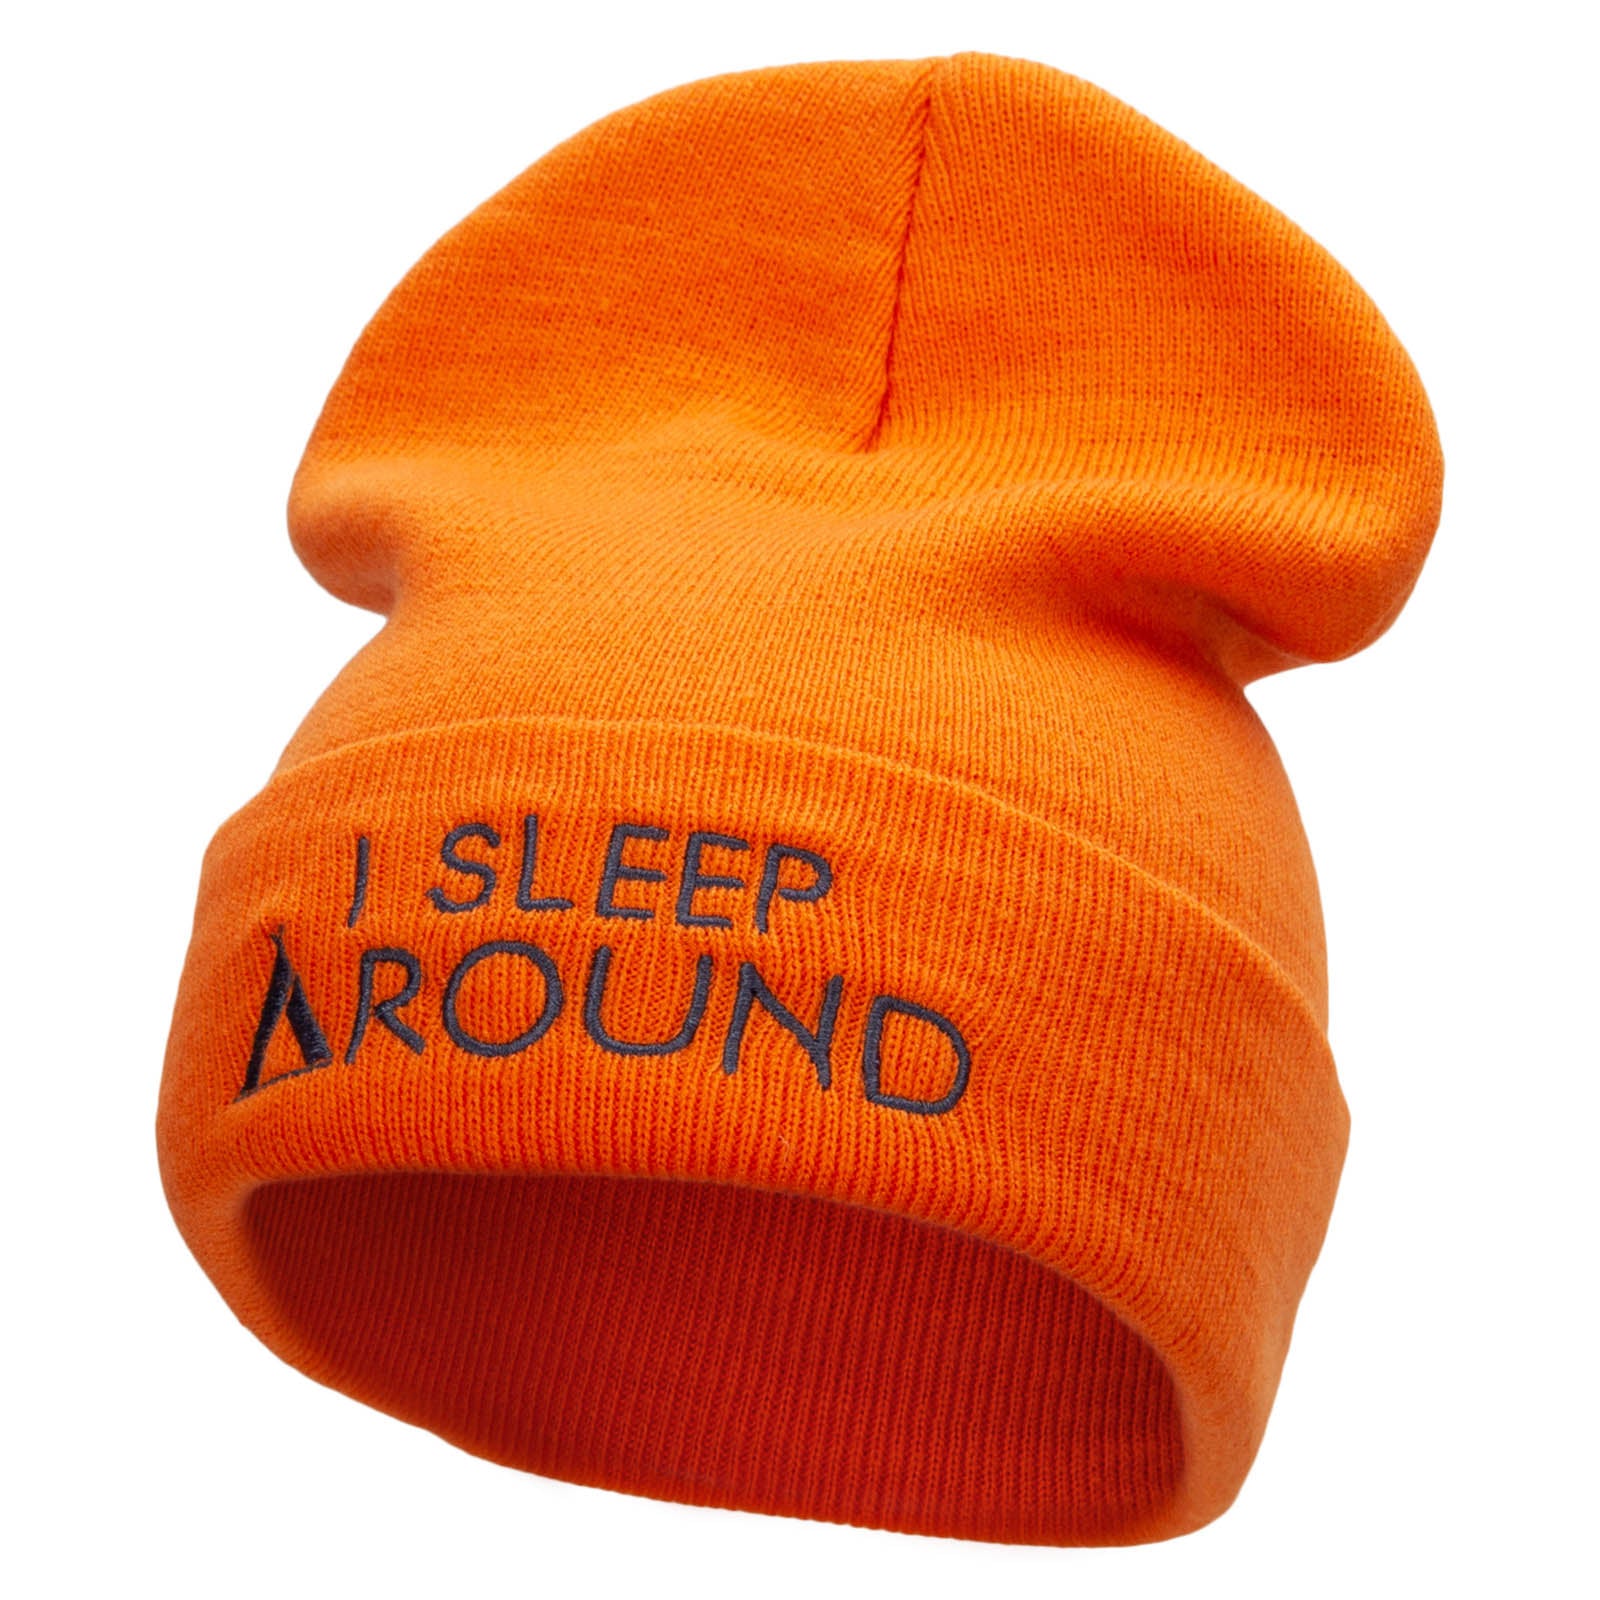 I Sleep Around Embroidered 12 Inch Long Knitted Beanie - Orange OSFM